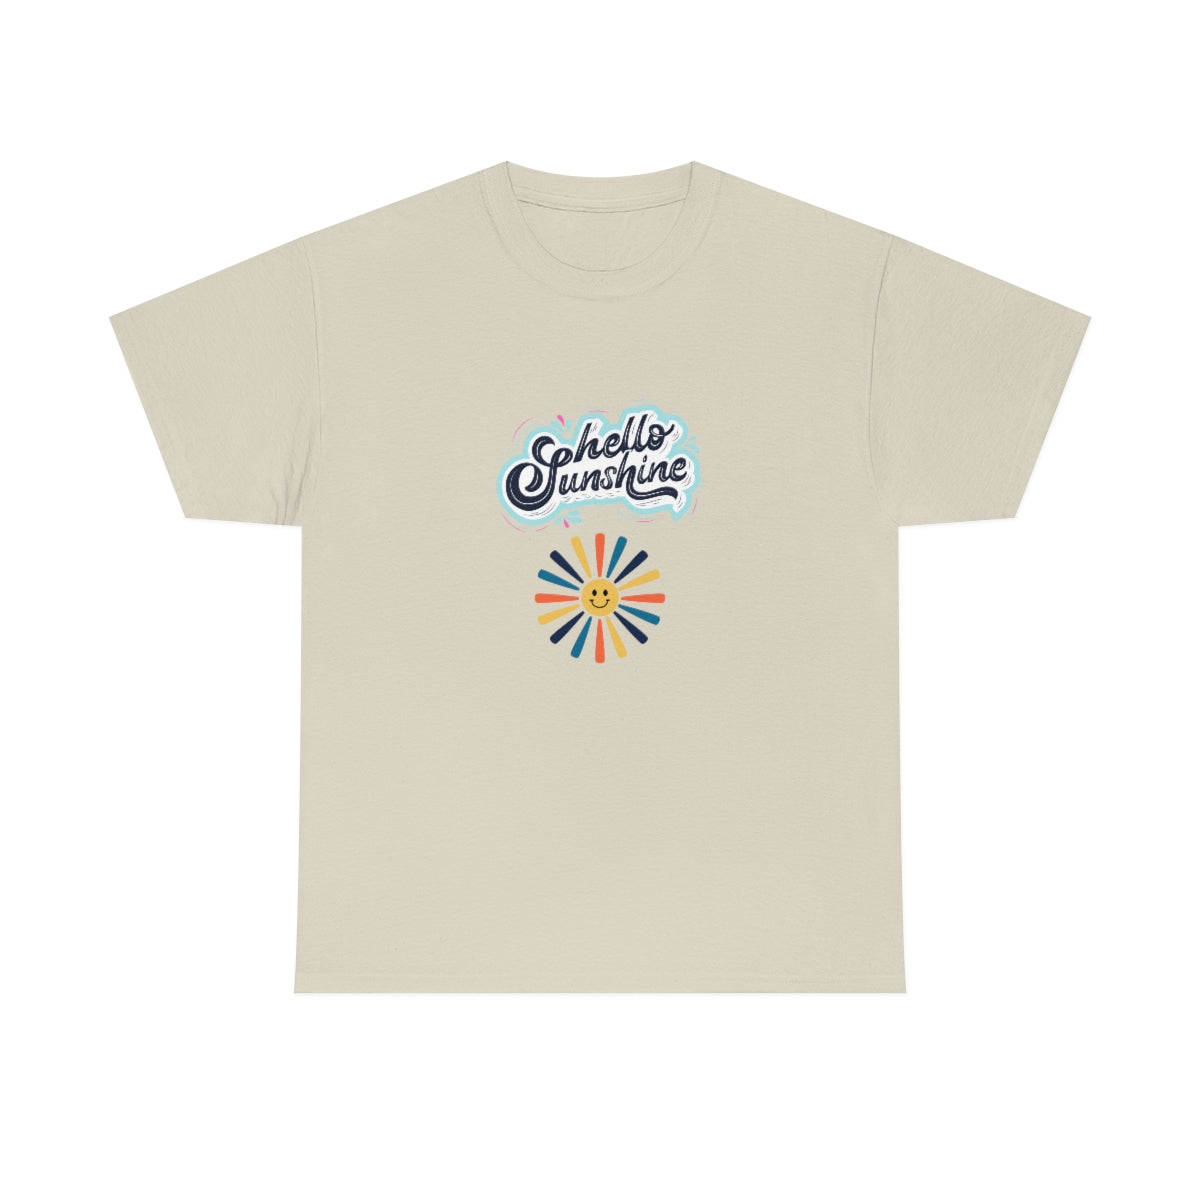 Hello Sunshine Tee, Retro Sunshine Tee, Vintage Graphic T-Shirt, Retro Sun Tshirt, Summer Shirt, Boho Shirt, Sunshine, Camping Shirt - The Good Life Vibe